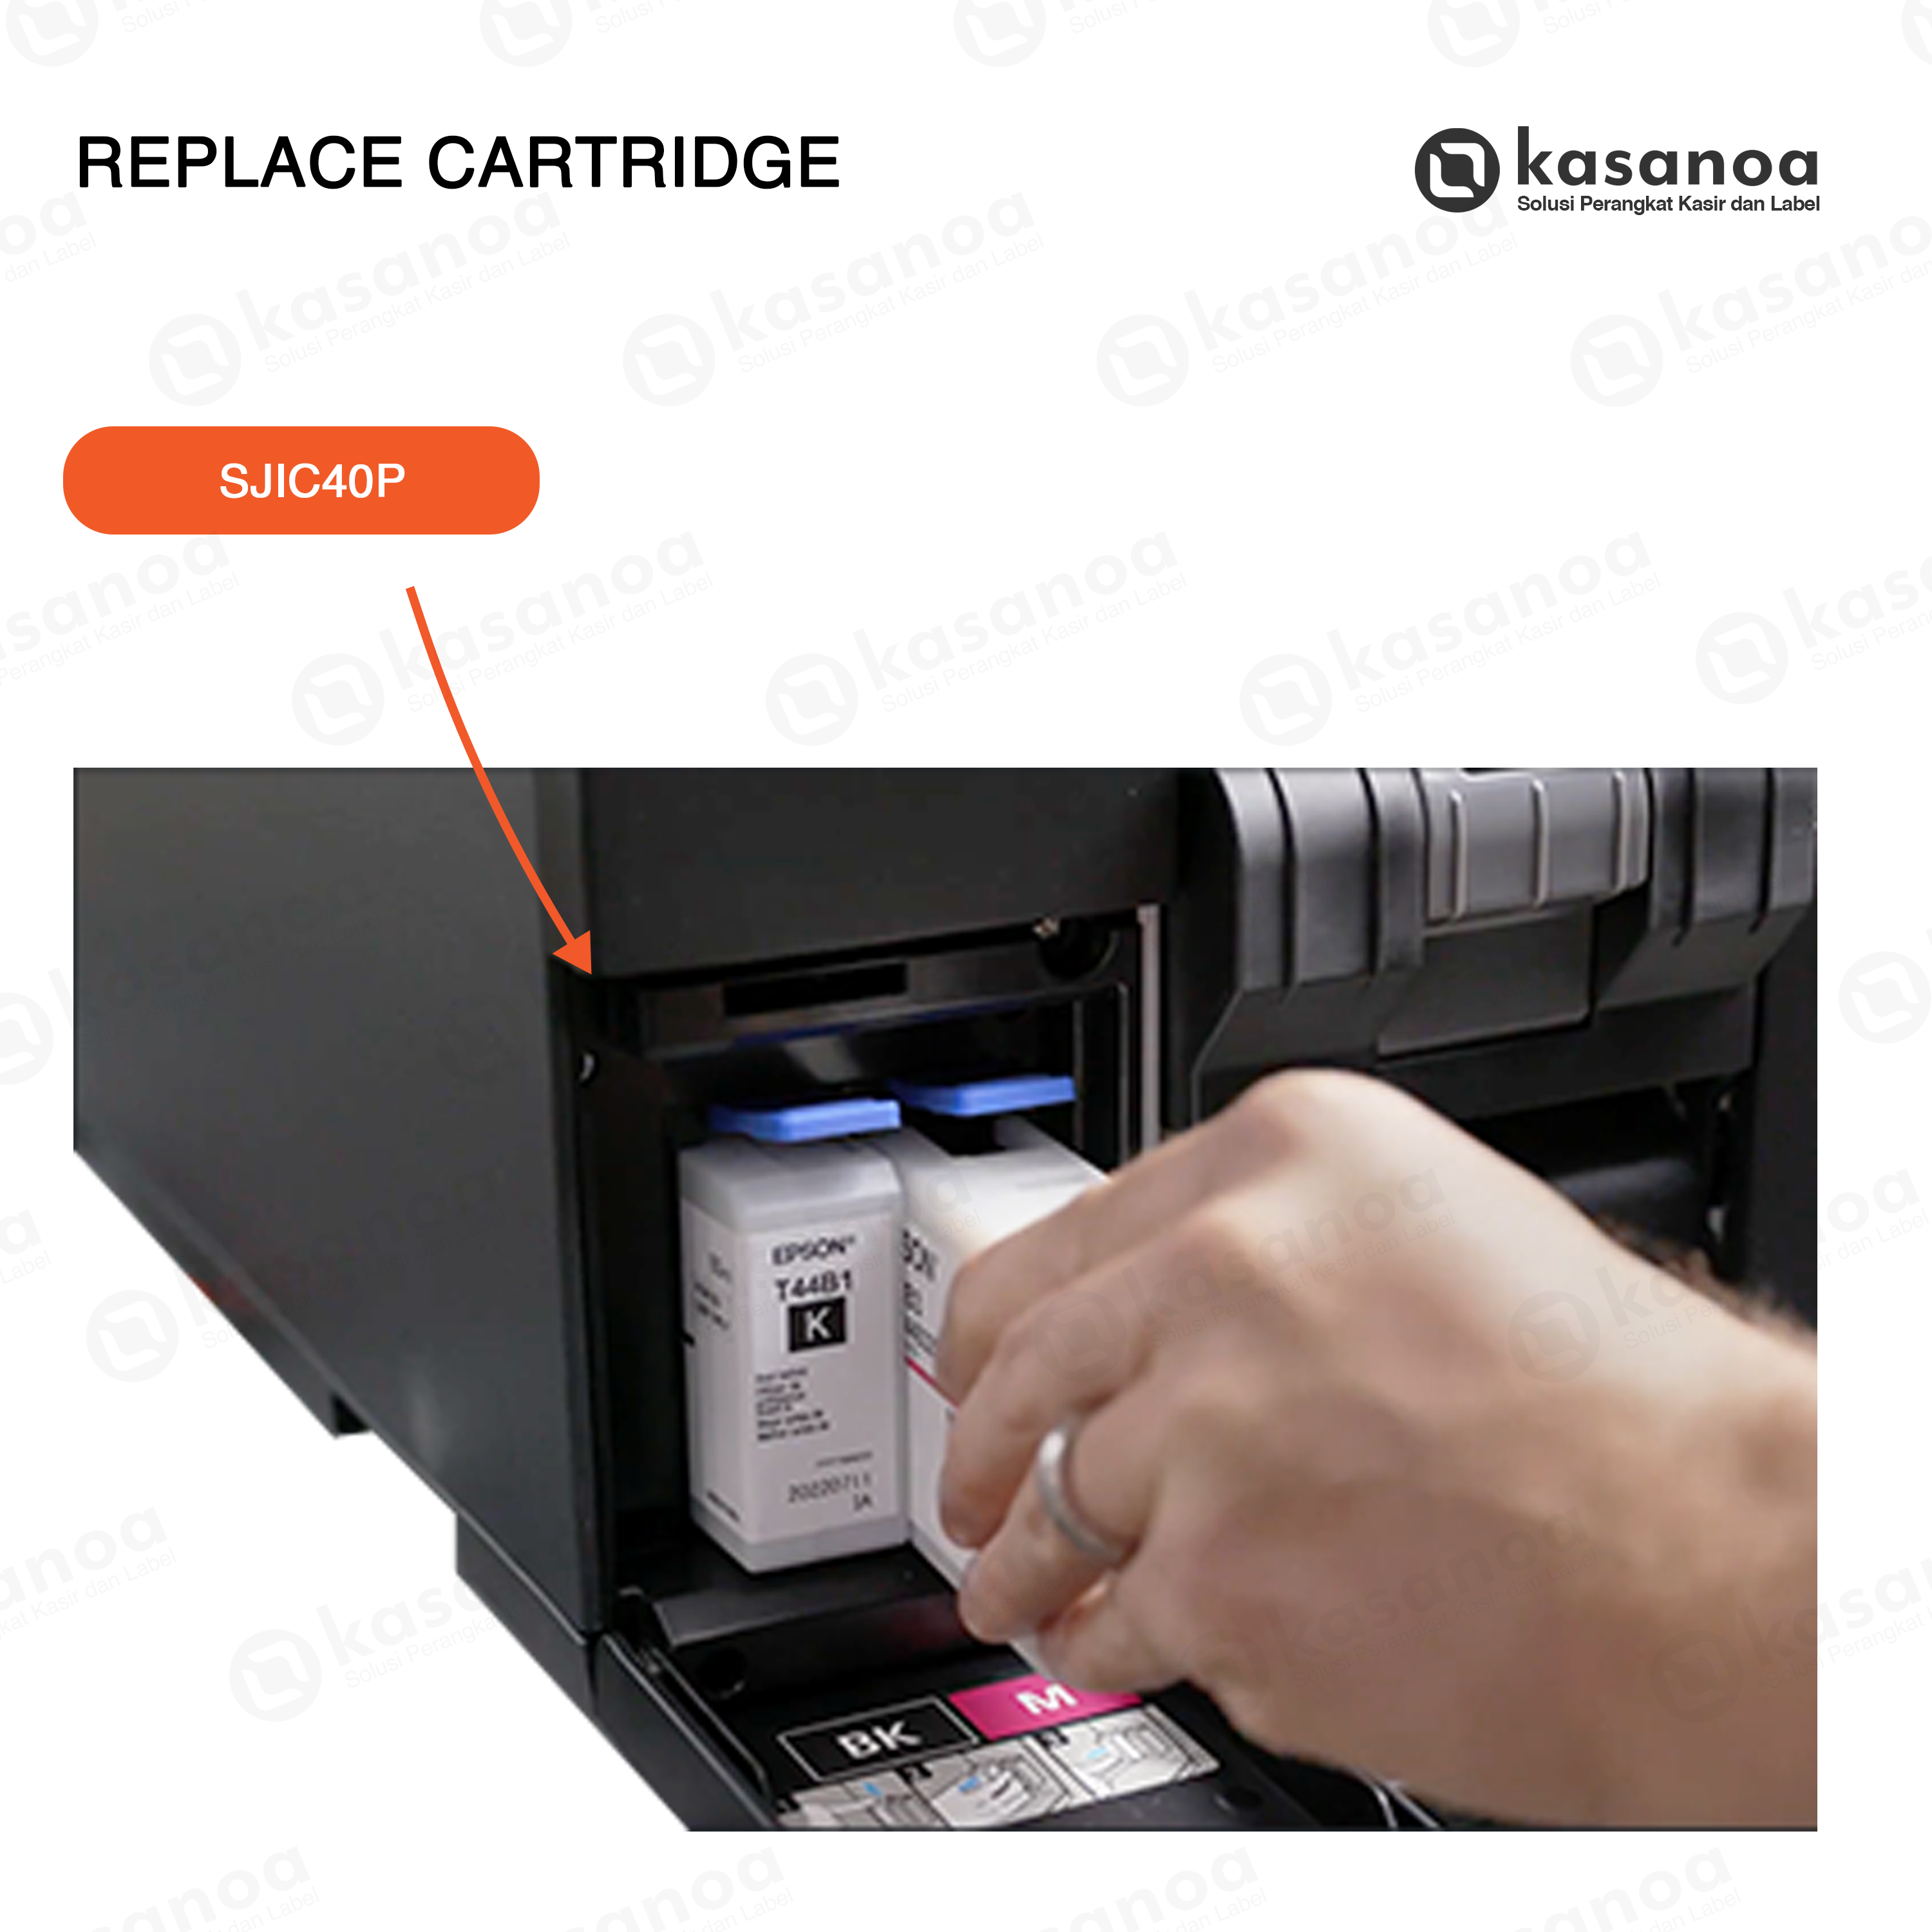 Printer Label Sticker Barcode Epson ColorWorks C6050A Inkjet Color